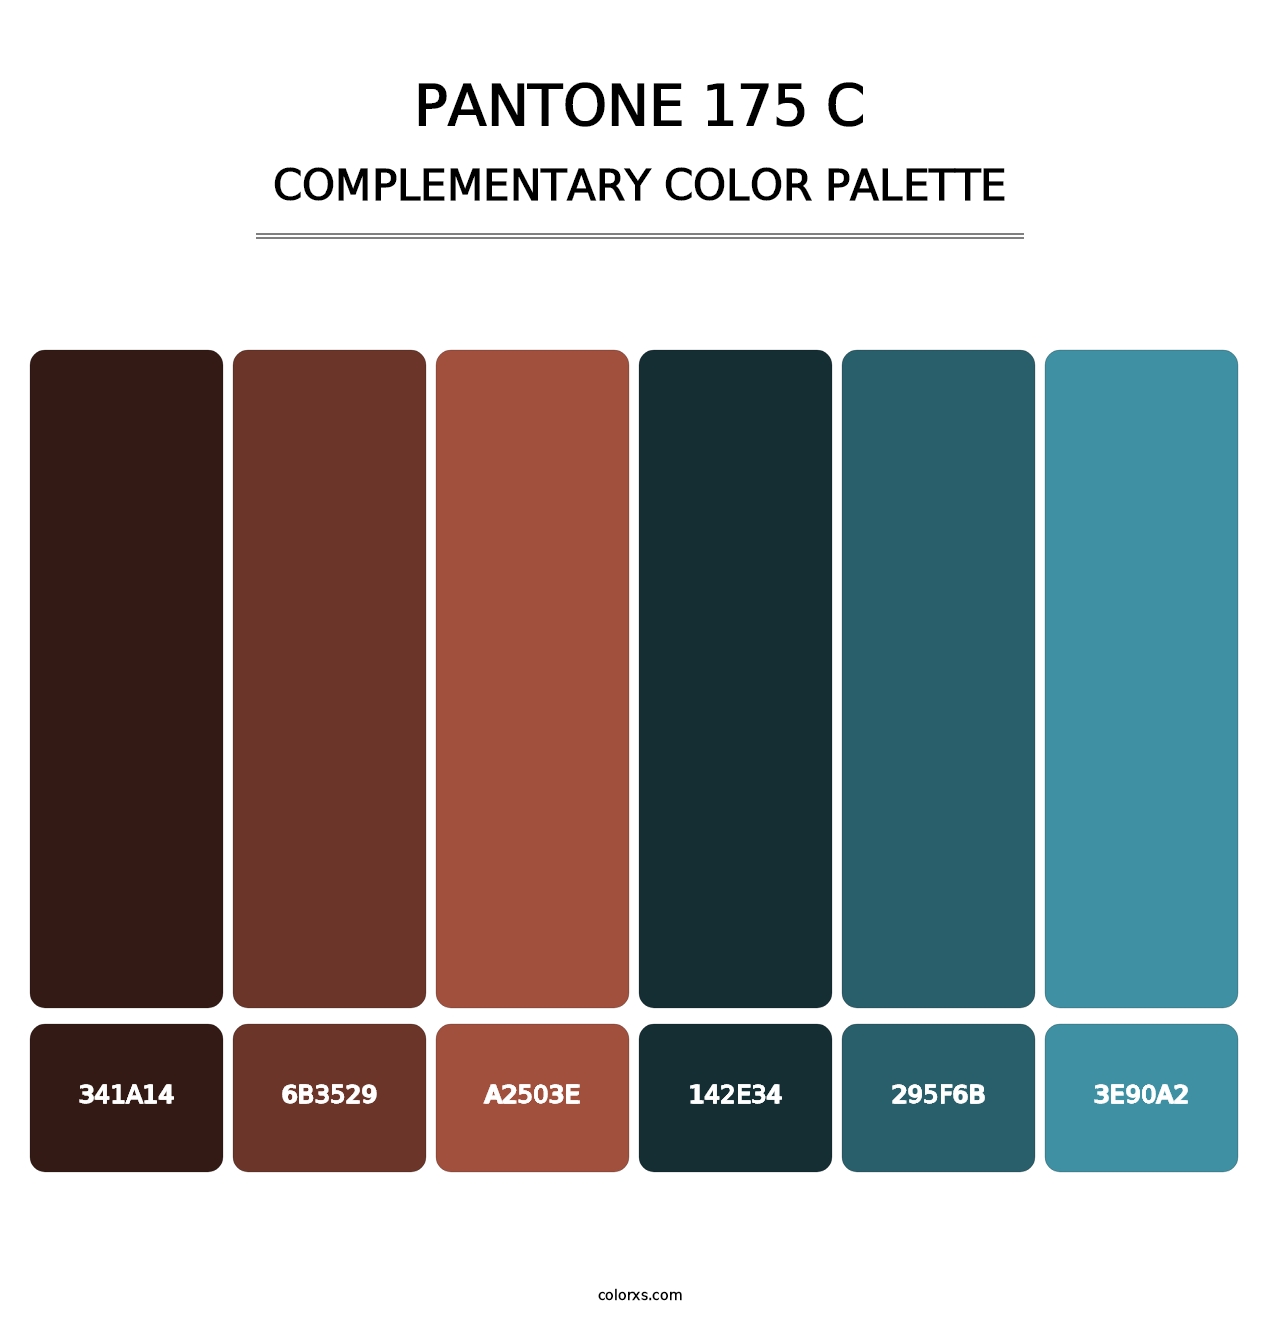 PANTONE 175 C - Complementary Color Palette